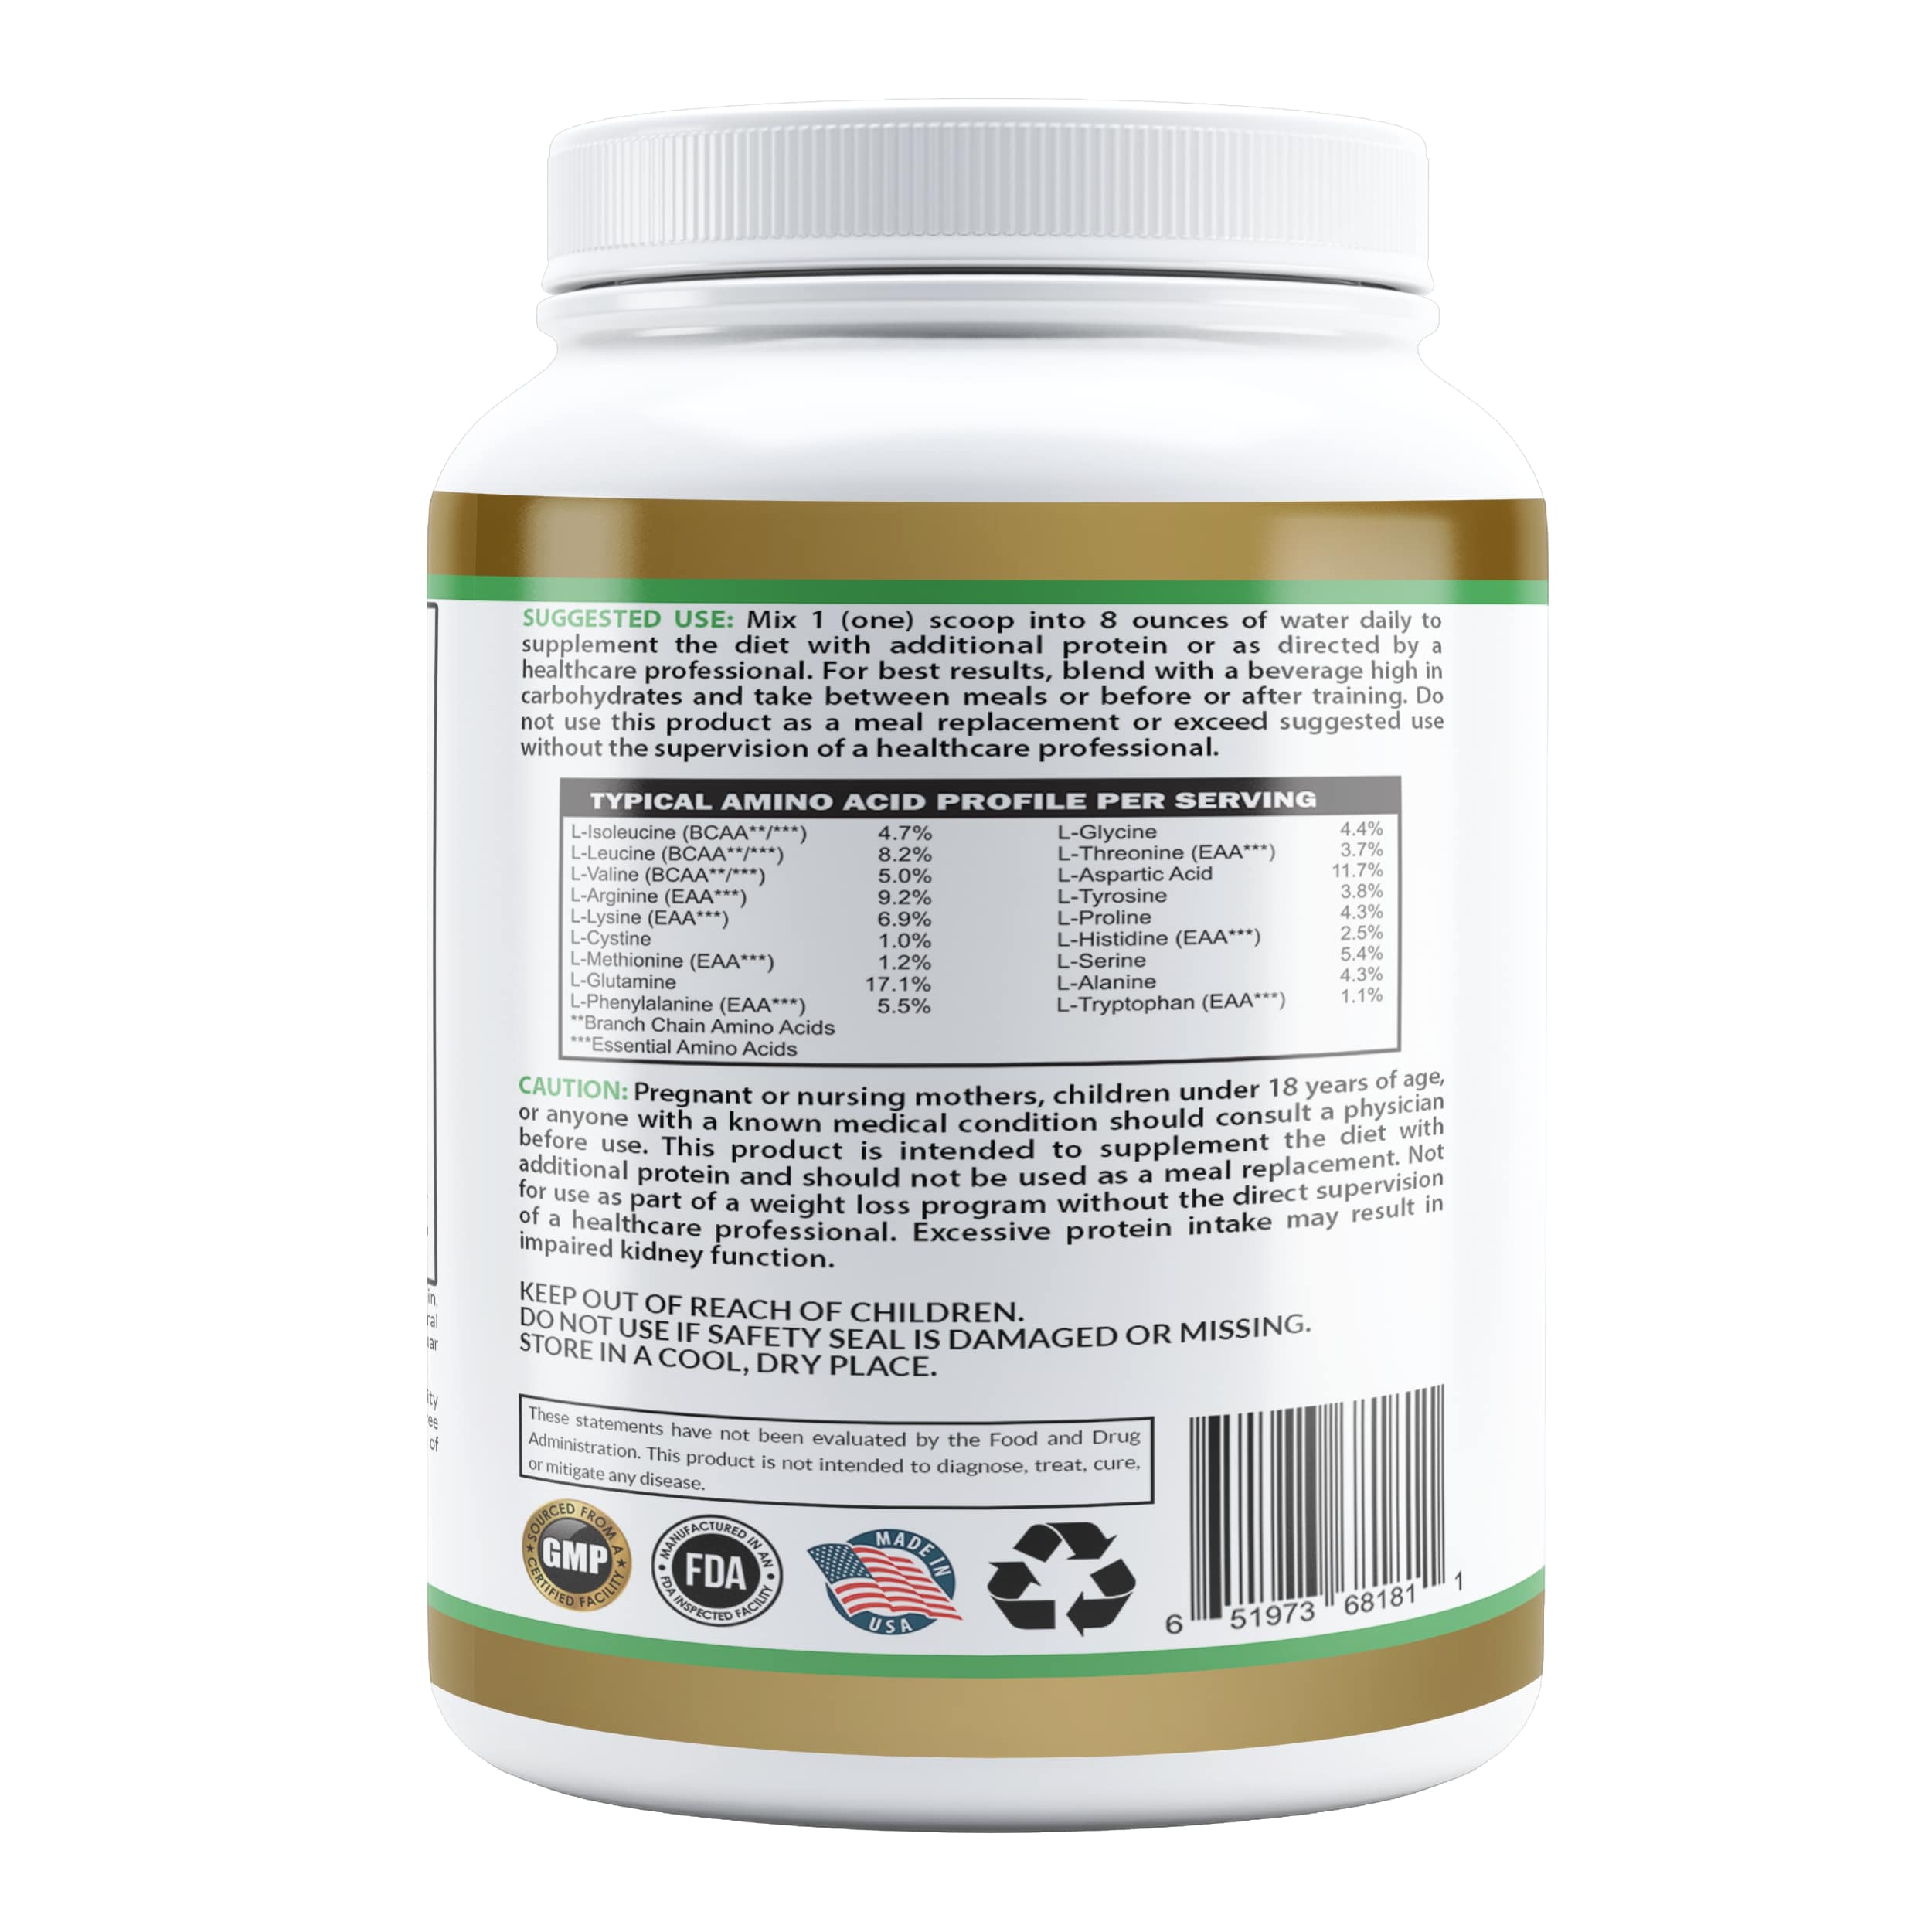 QVP01/02A - Vegan Protein Plant Based Nutrition (Vanilla/Chocolate)